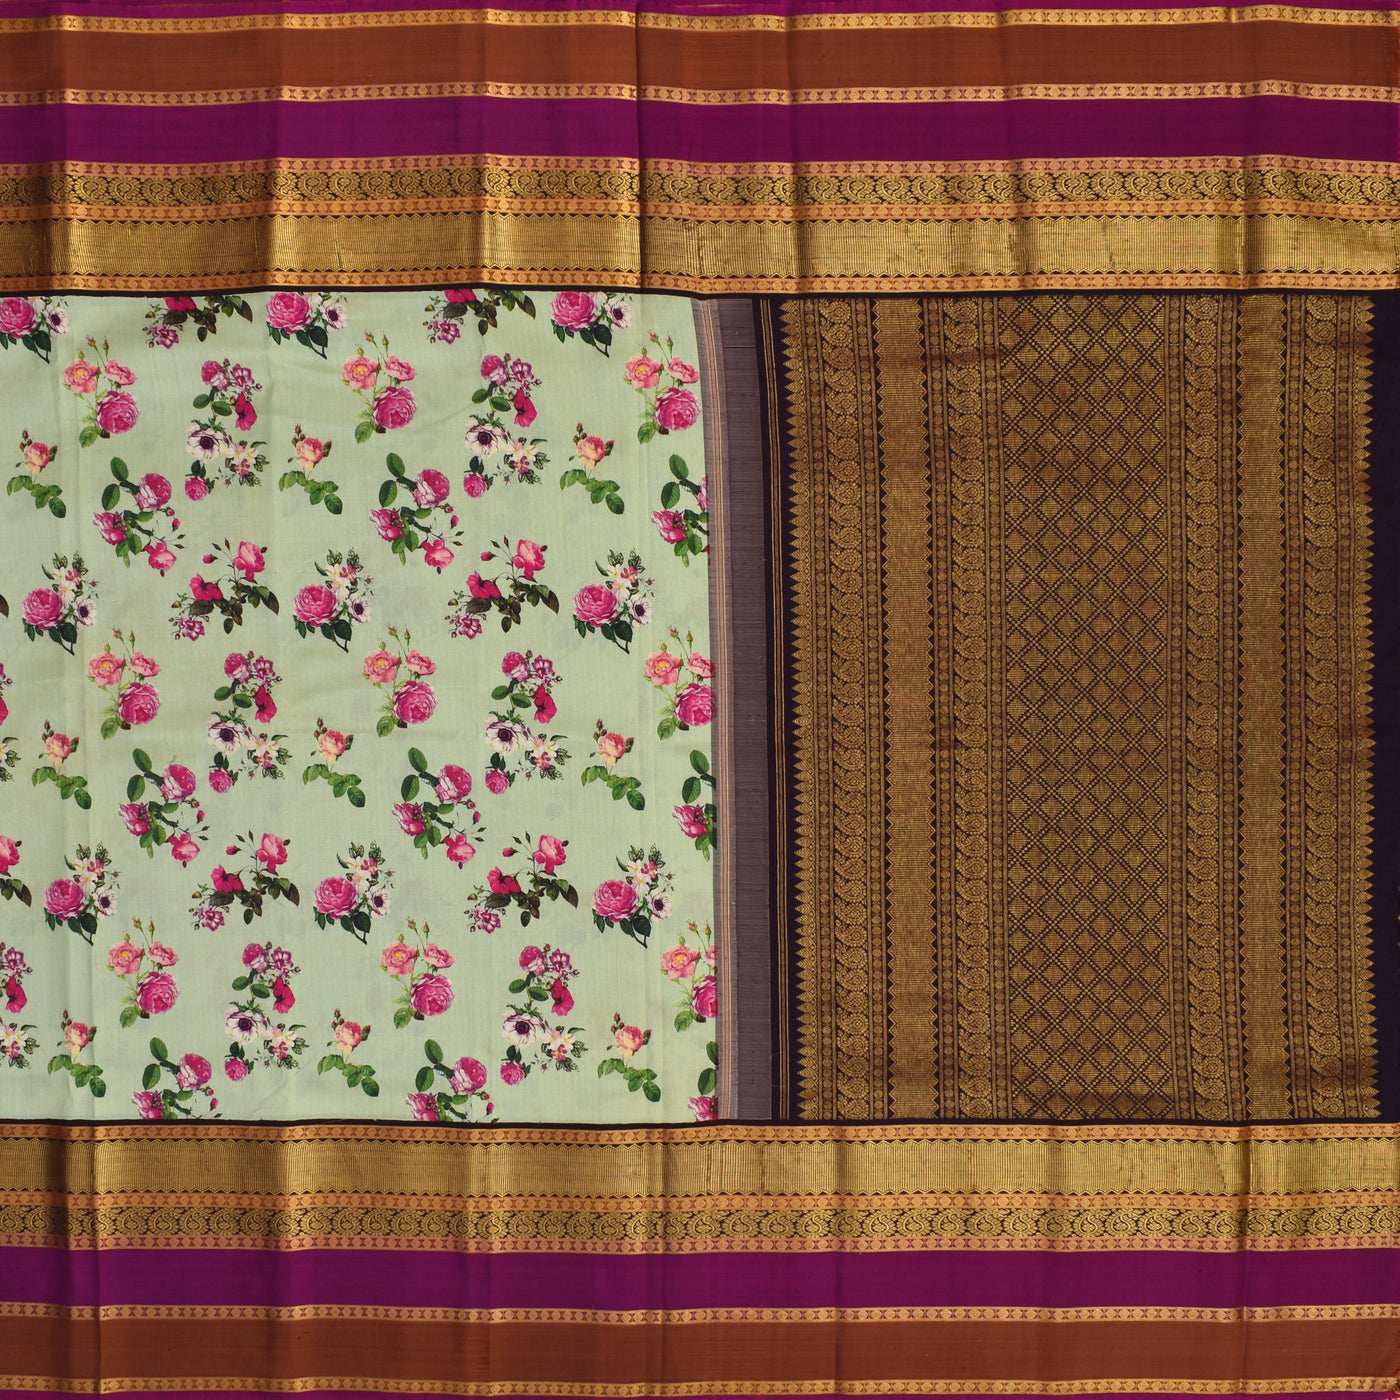 Apple Green Printed Kanchi Silk Saree with Floral Design